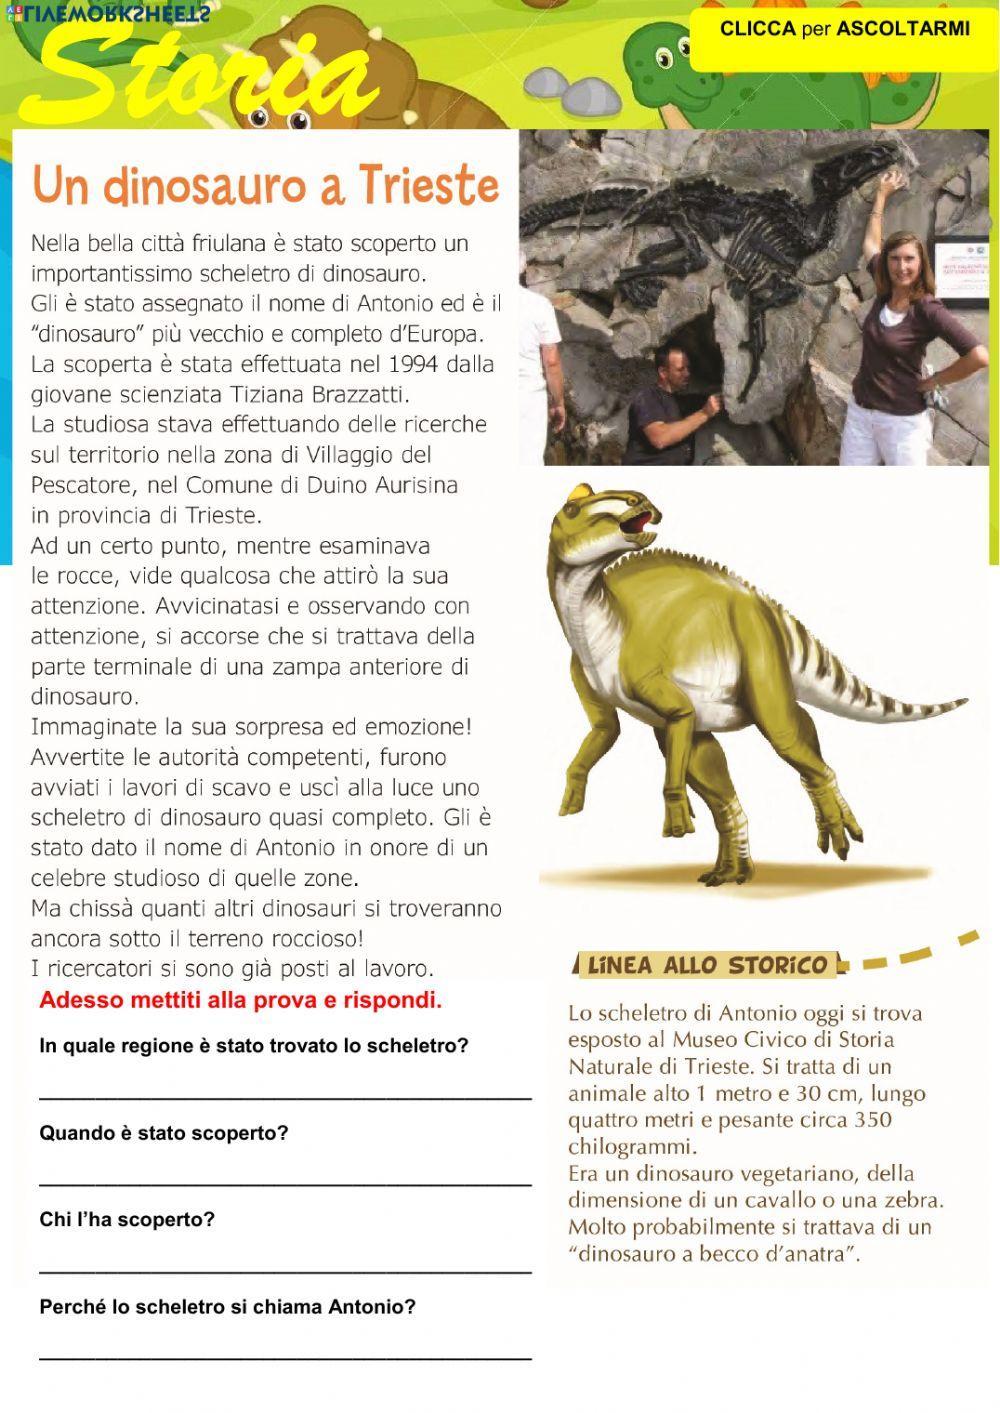 Dinosauri in Italia